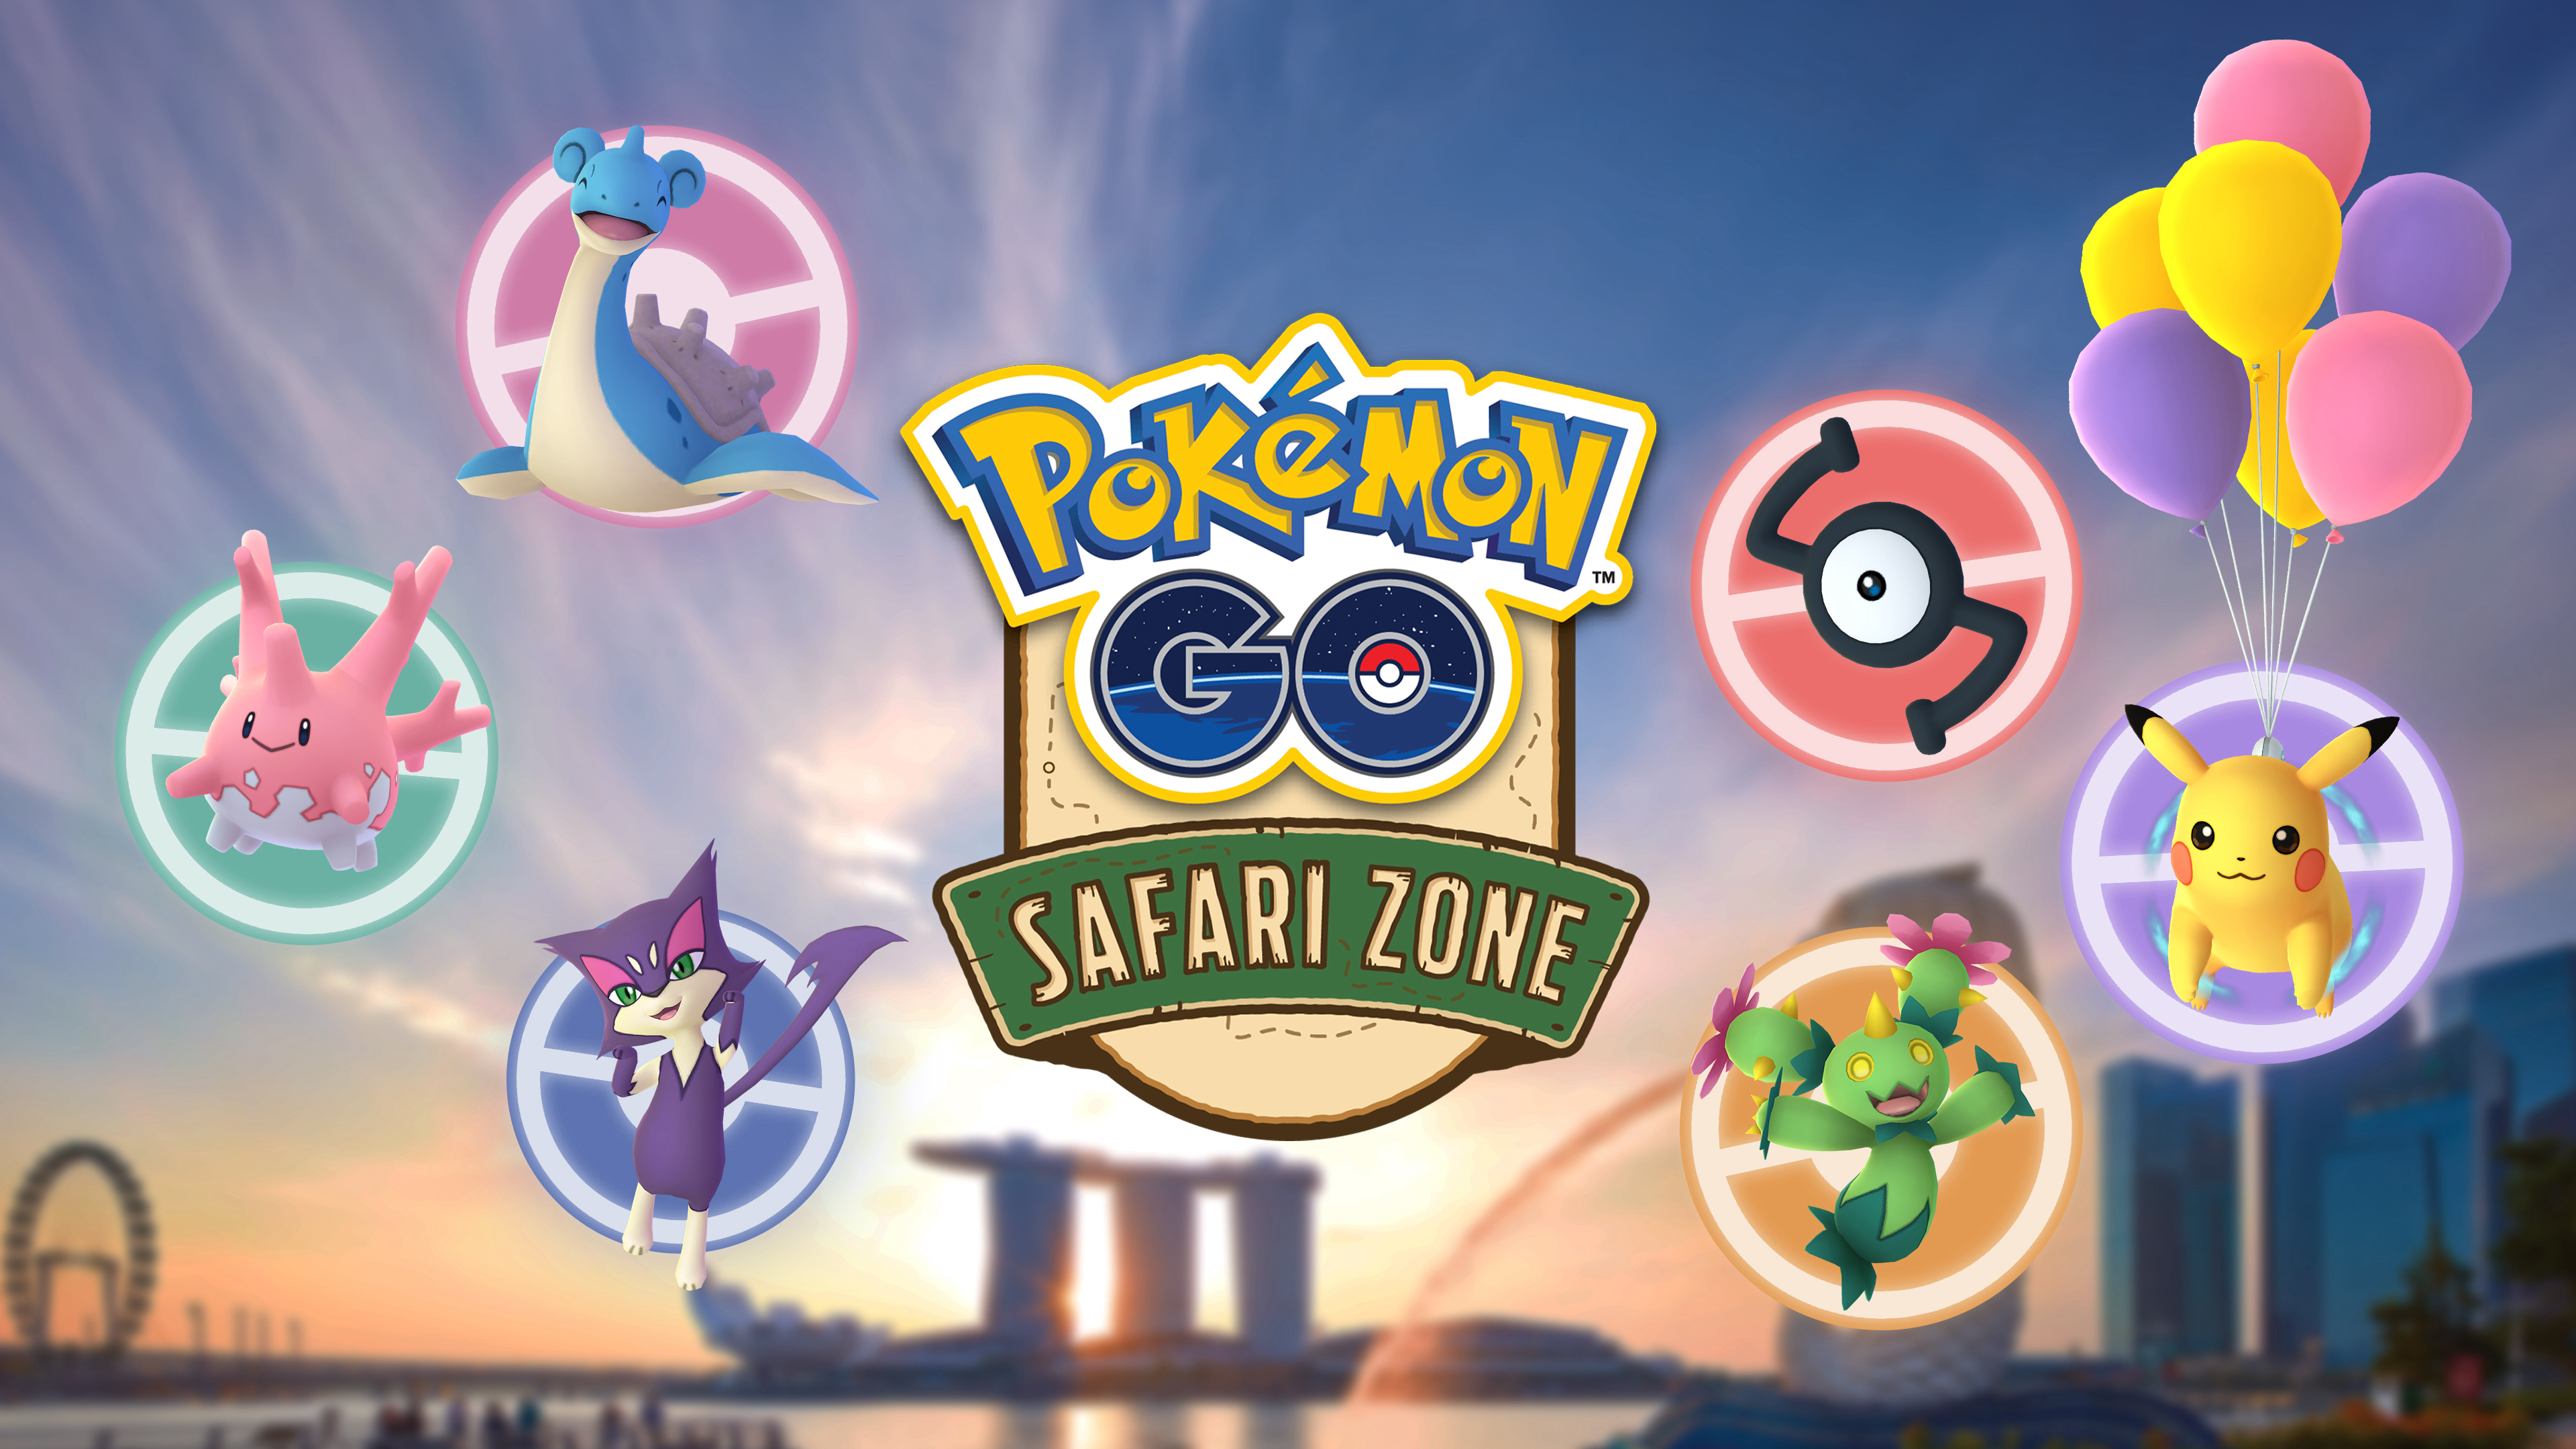 Pokémon GO events around the world!